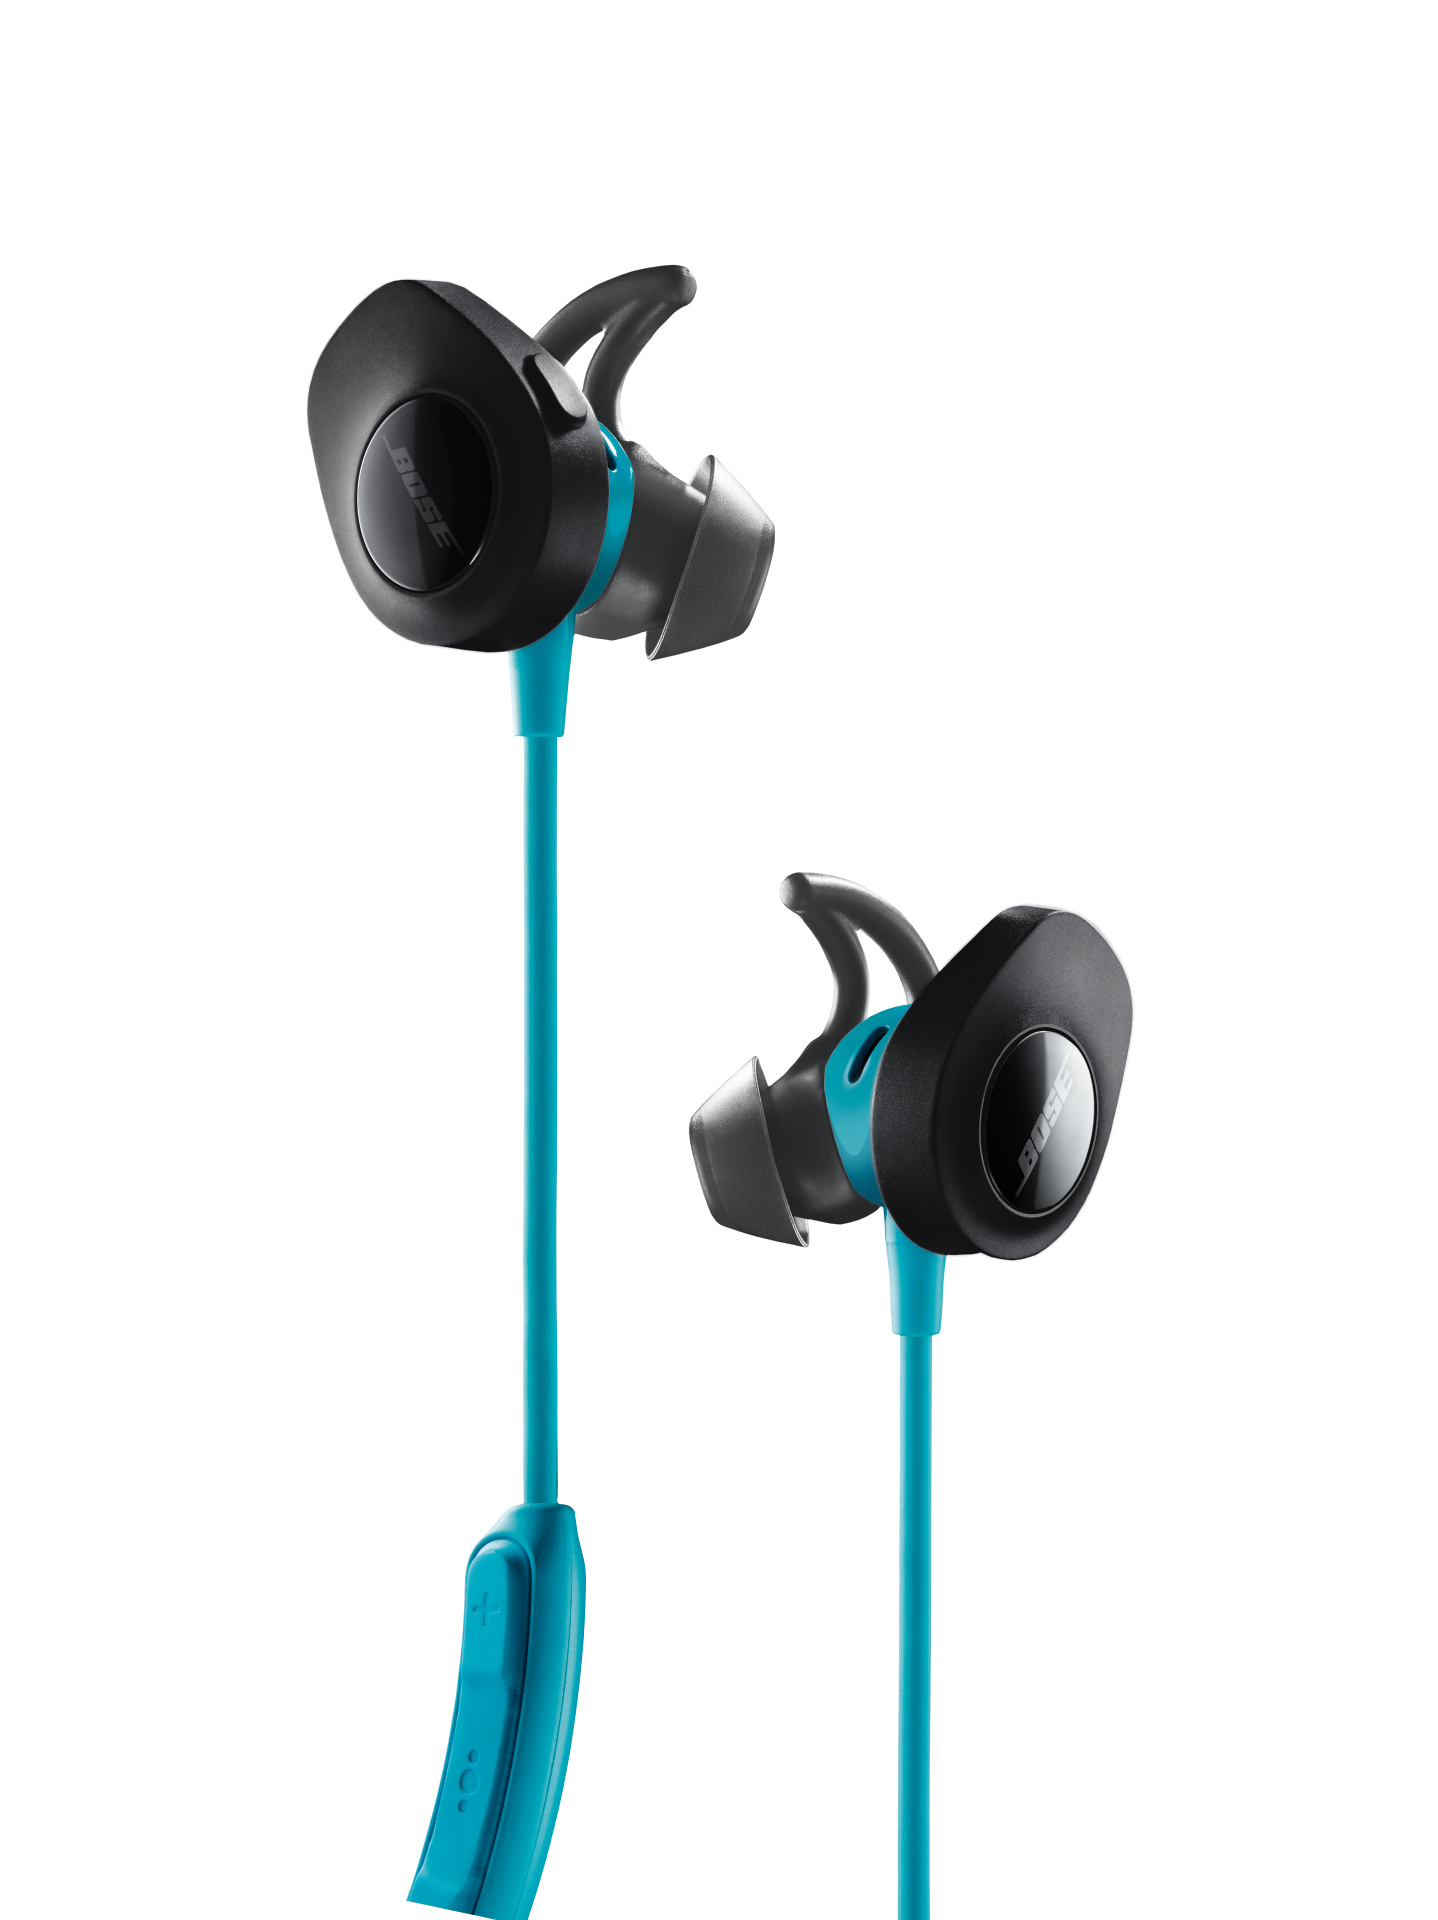 Bose SoundSport Wireless Bluetooth Earbuds, Aqua - image 1 of 9